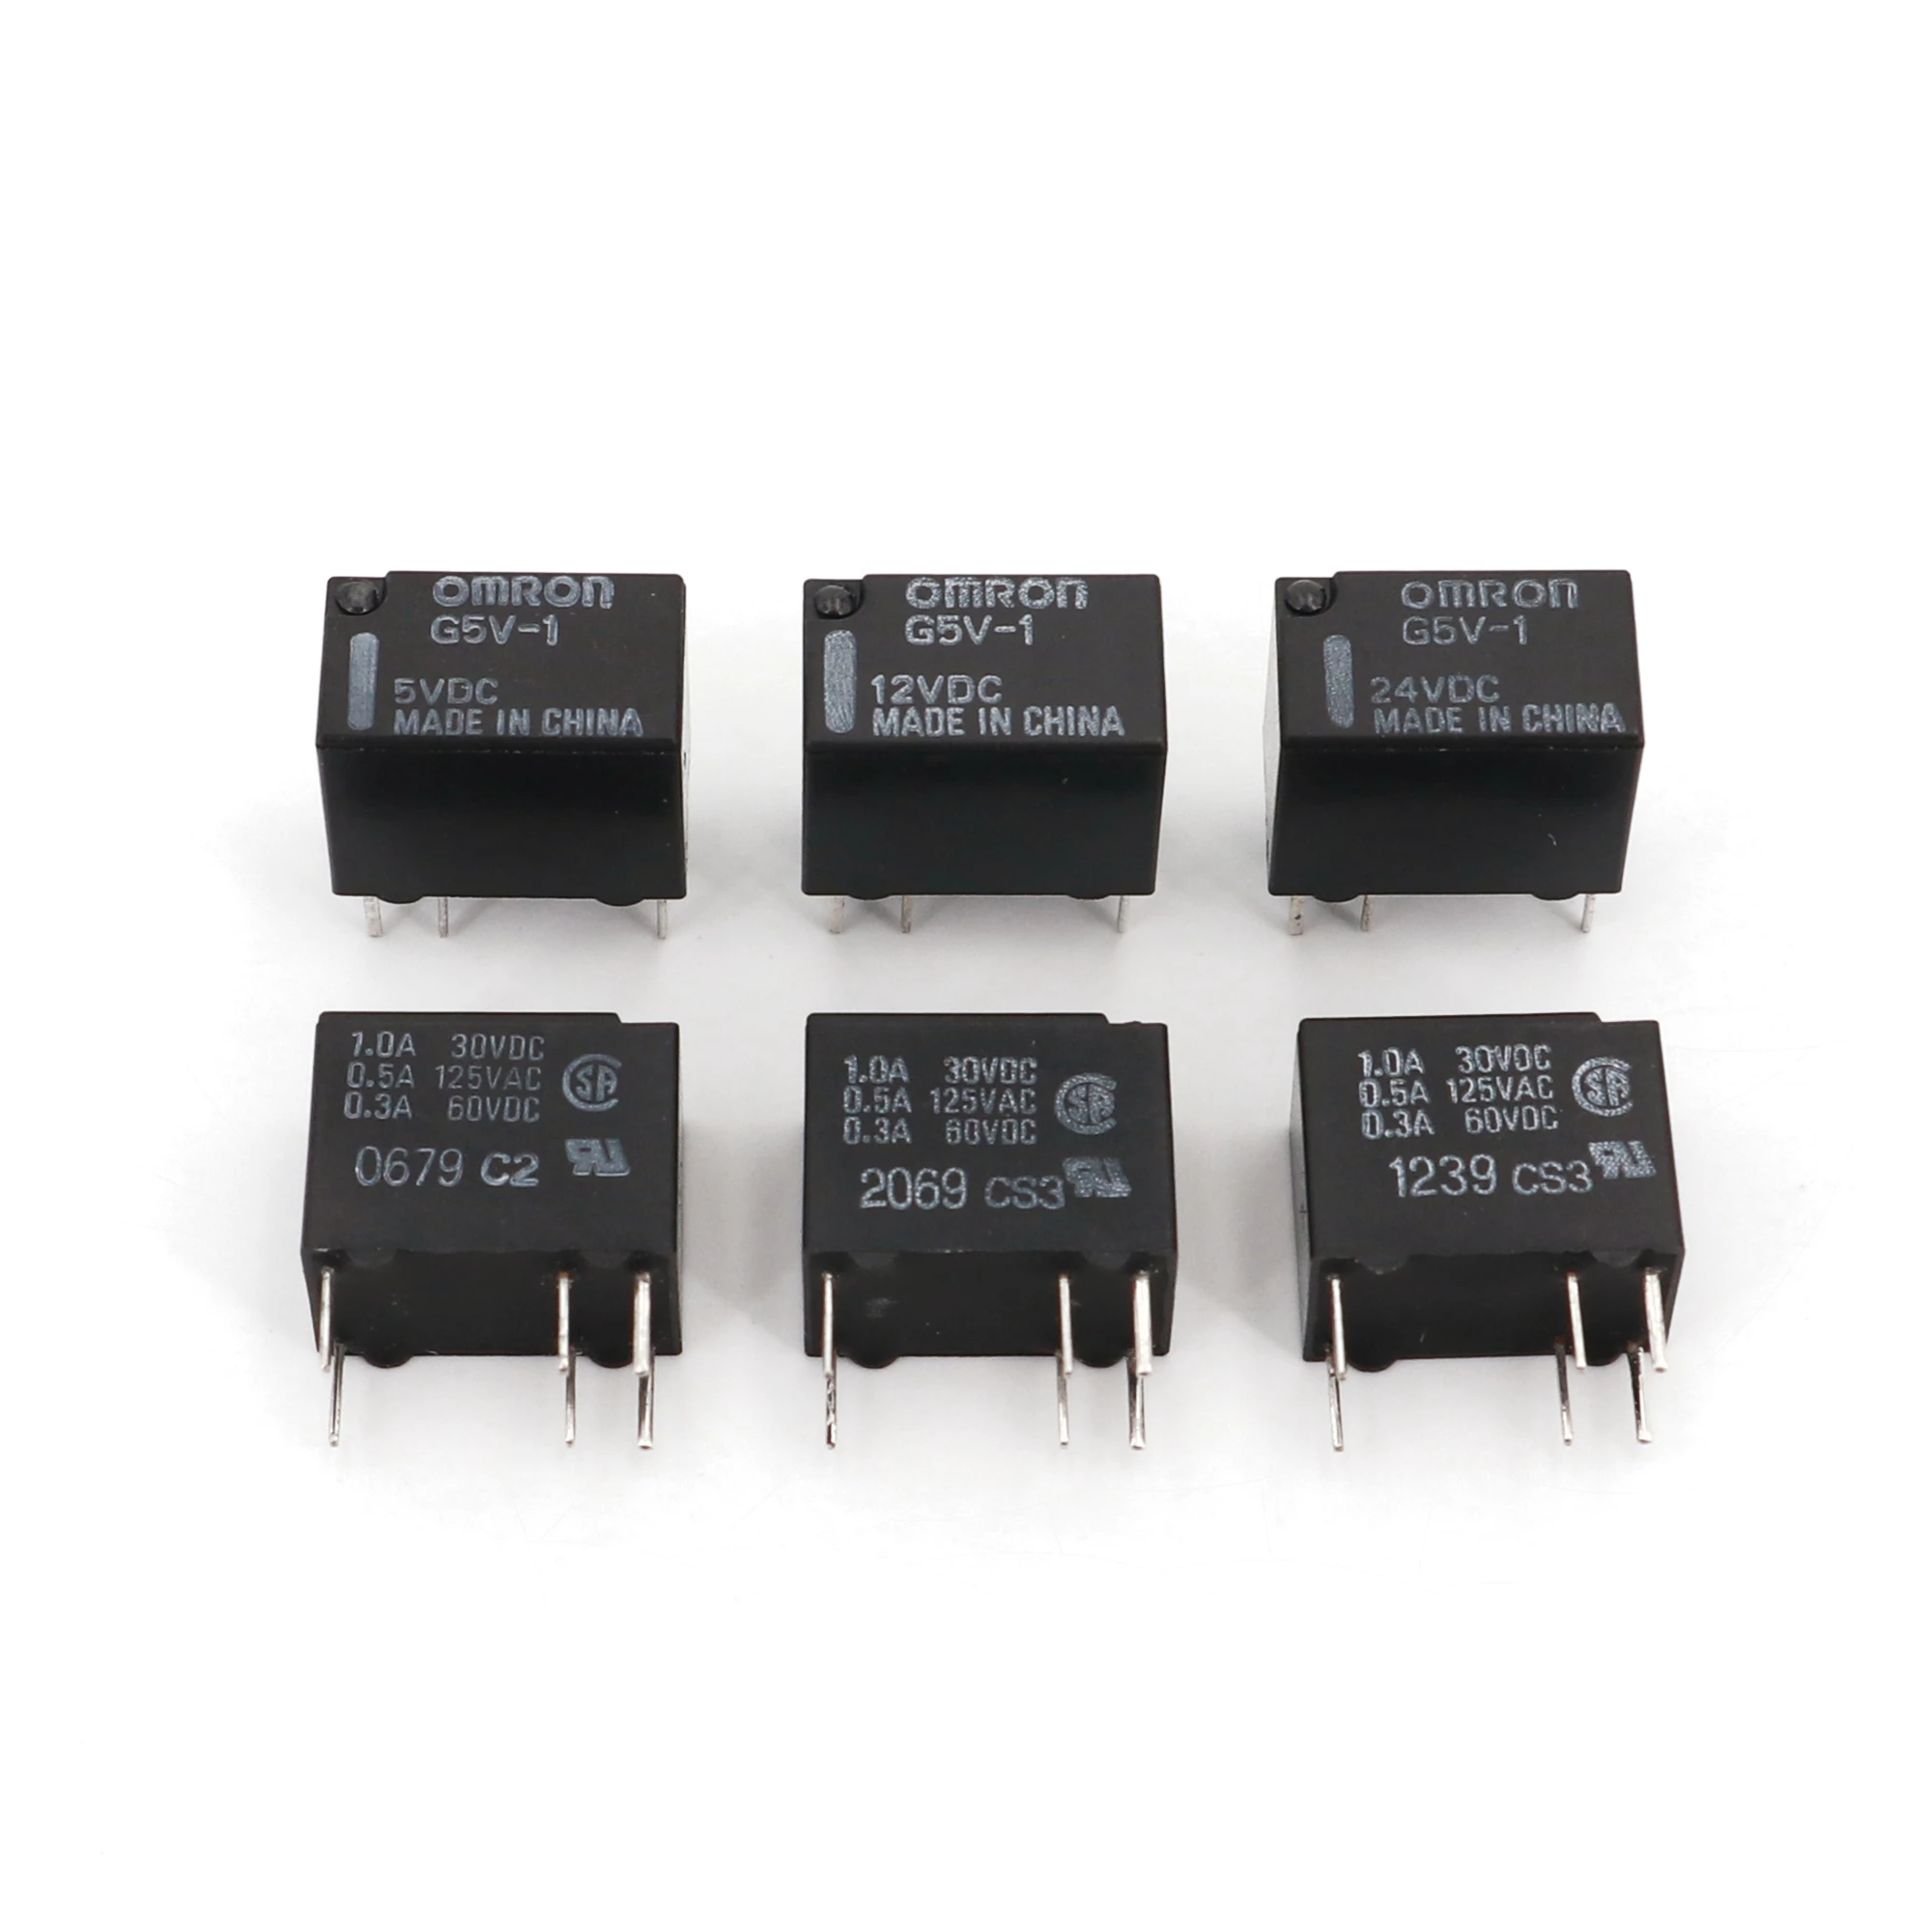 10 pcs G5V-2 5V DC 5VDC PCB Relay 8 PIN Coil DPDT Relay for Signal Circuits 